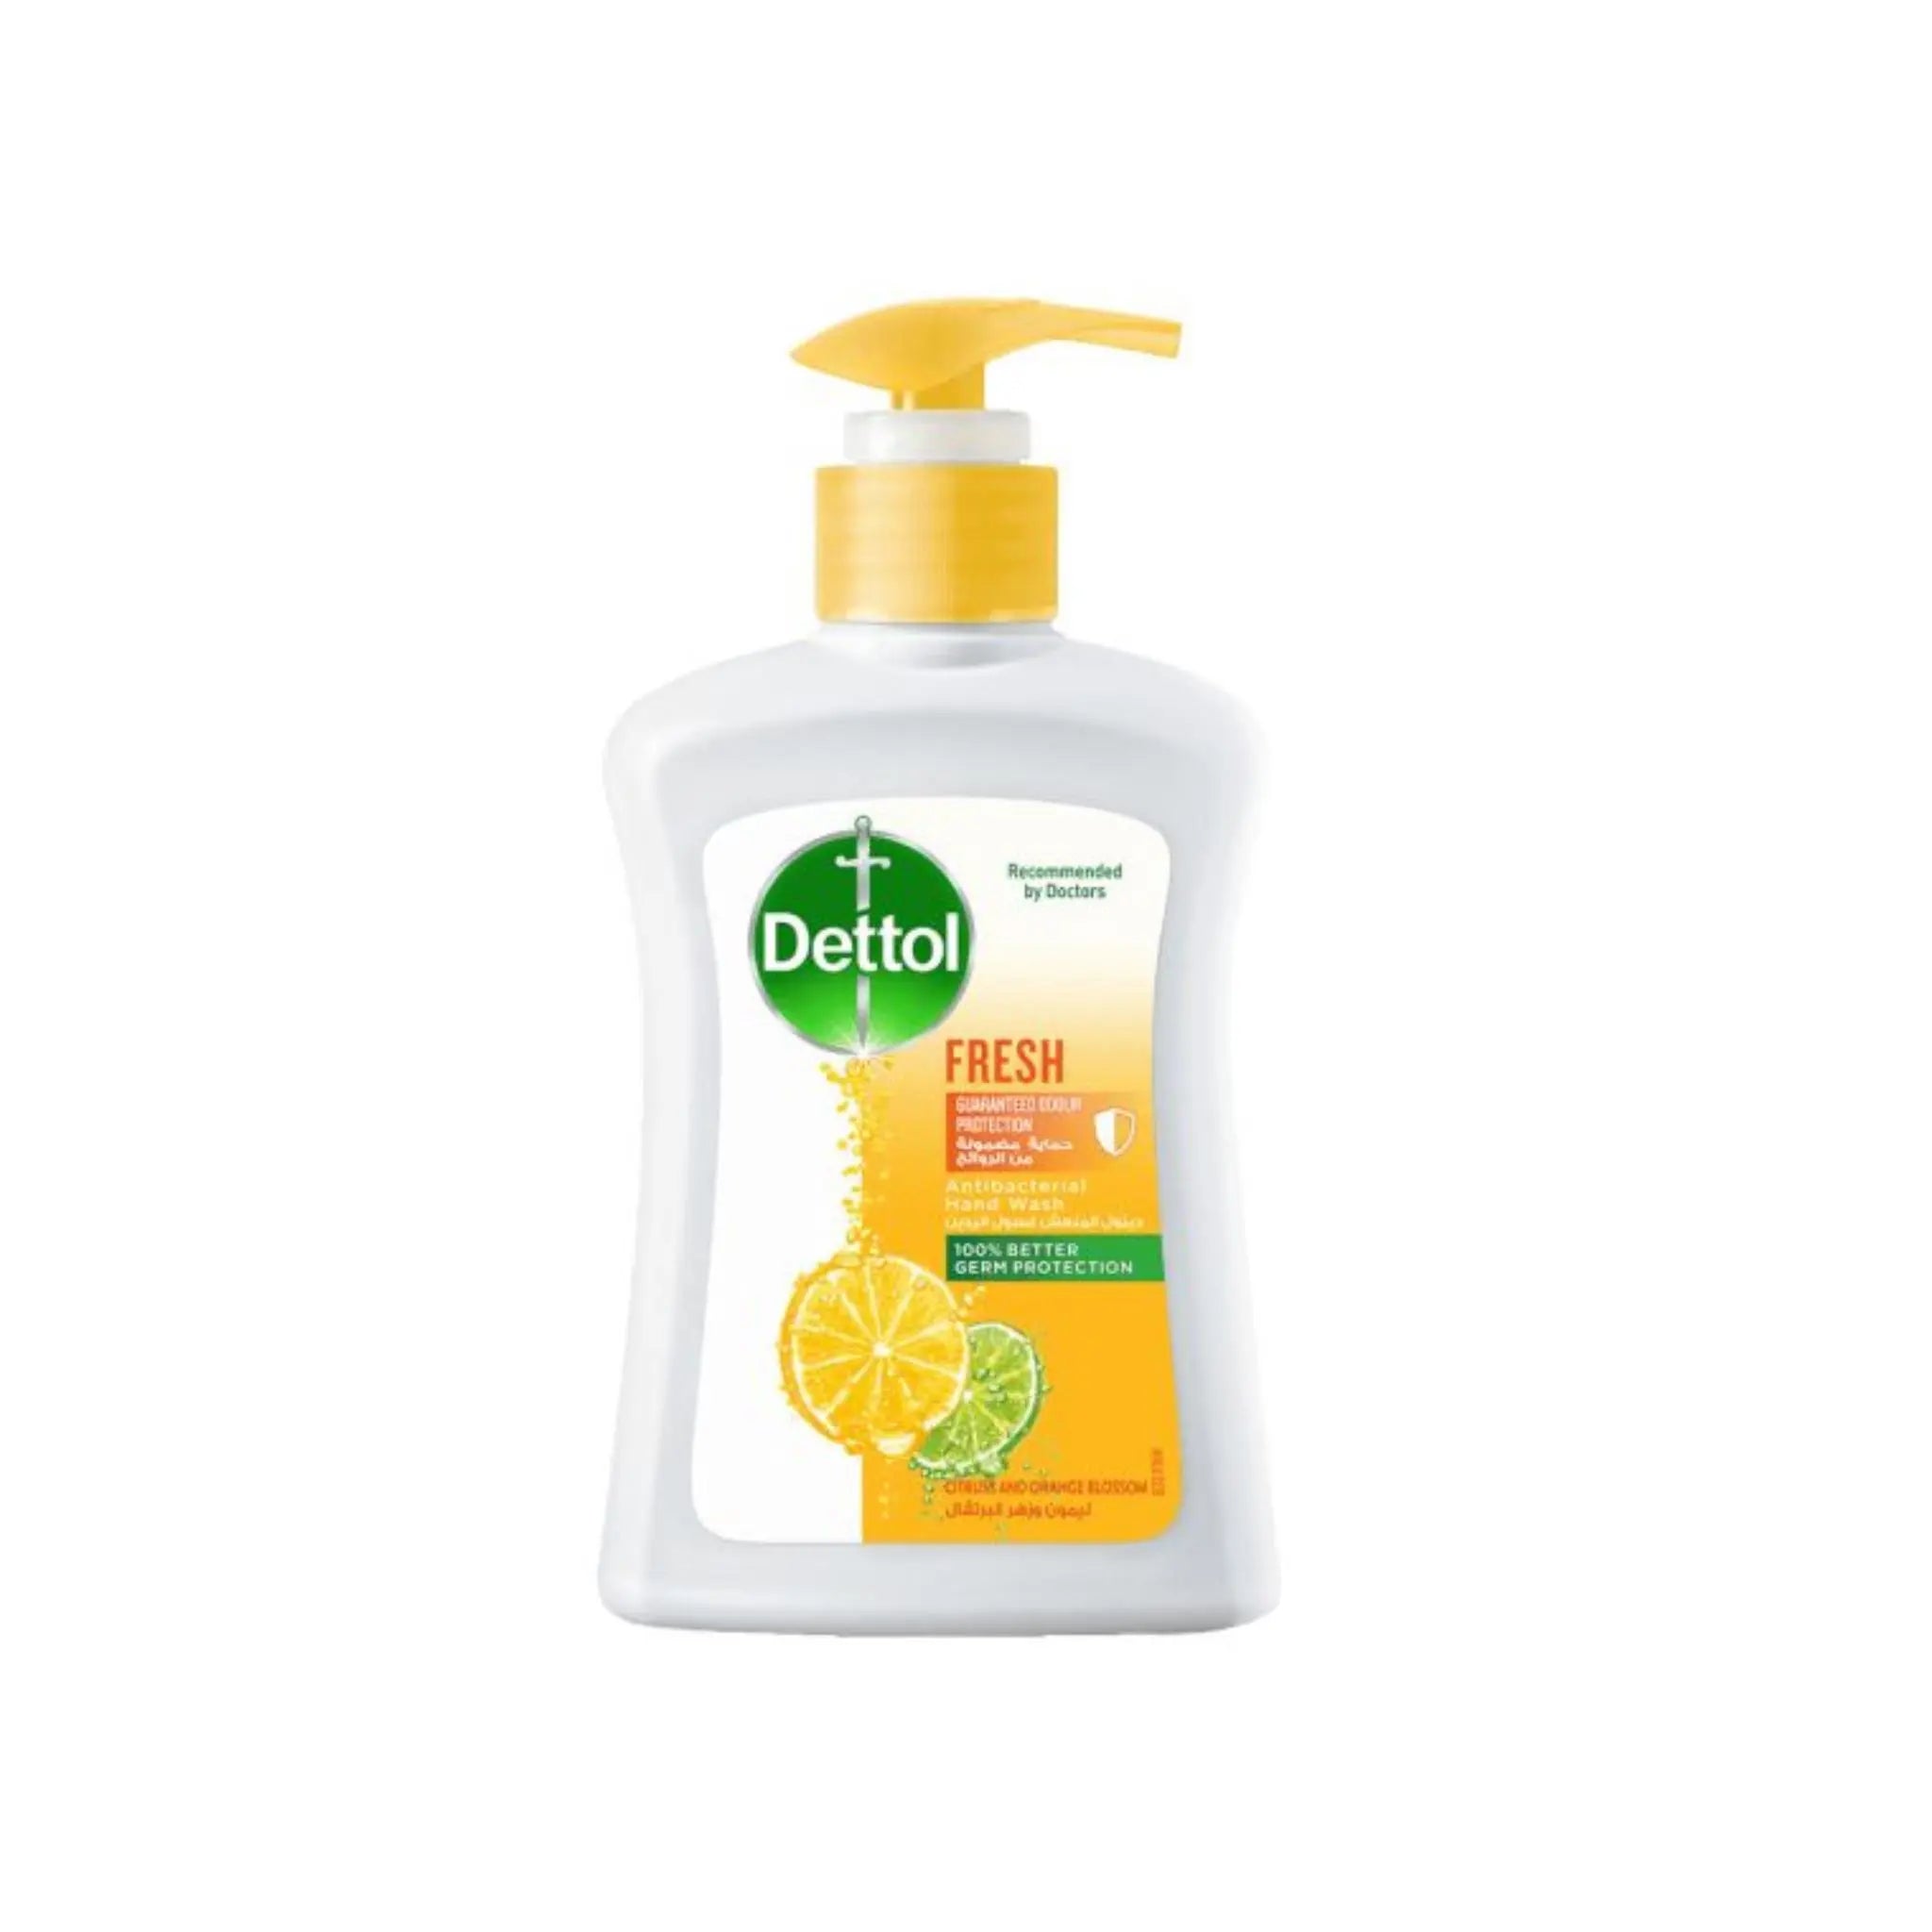 Dettol Fresh Anti-Bacterial Hand Wash 200ml - 2x4 sets (1 carton) Marino.AE